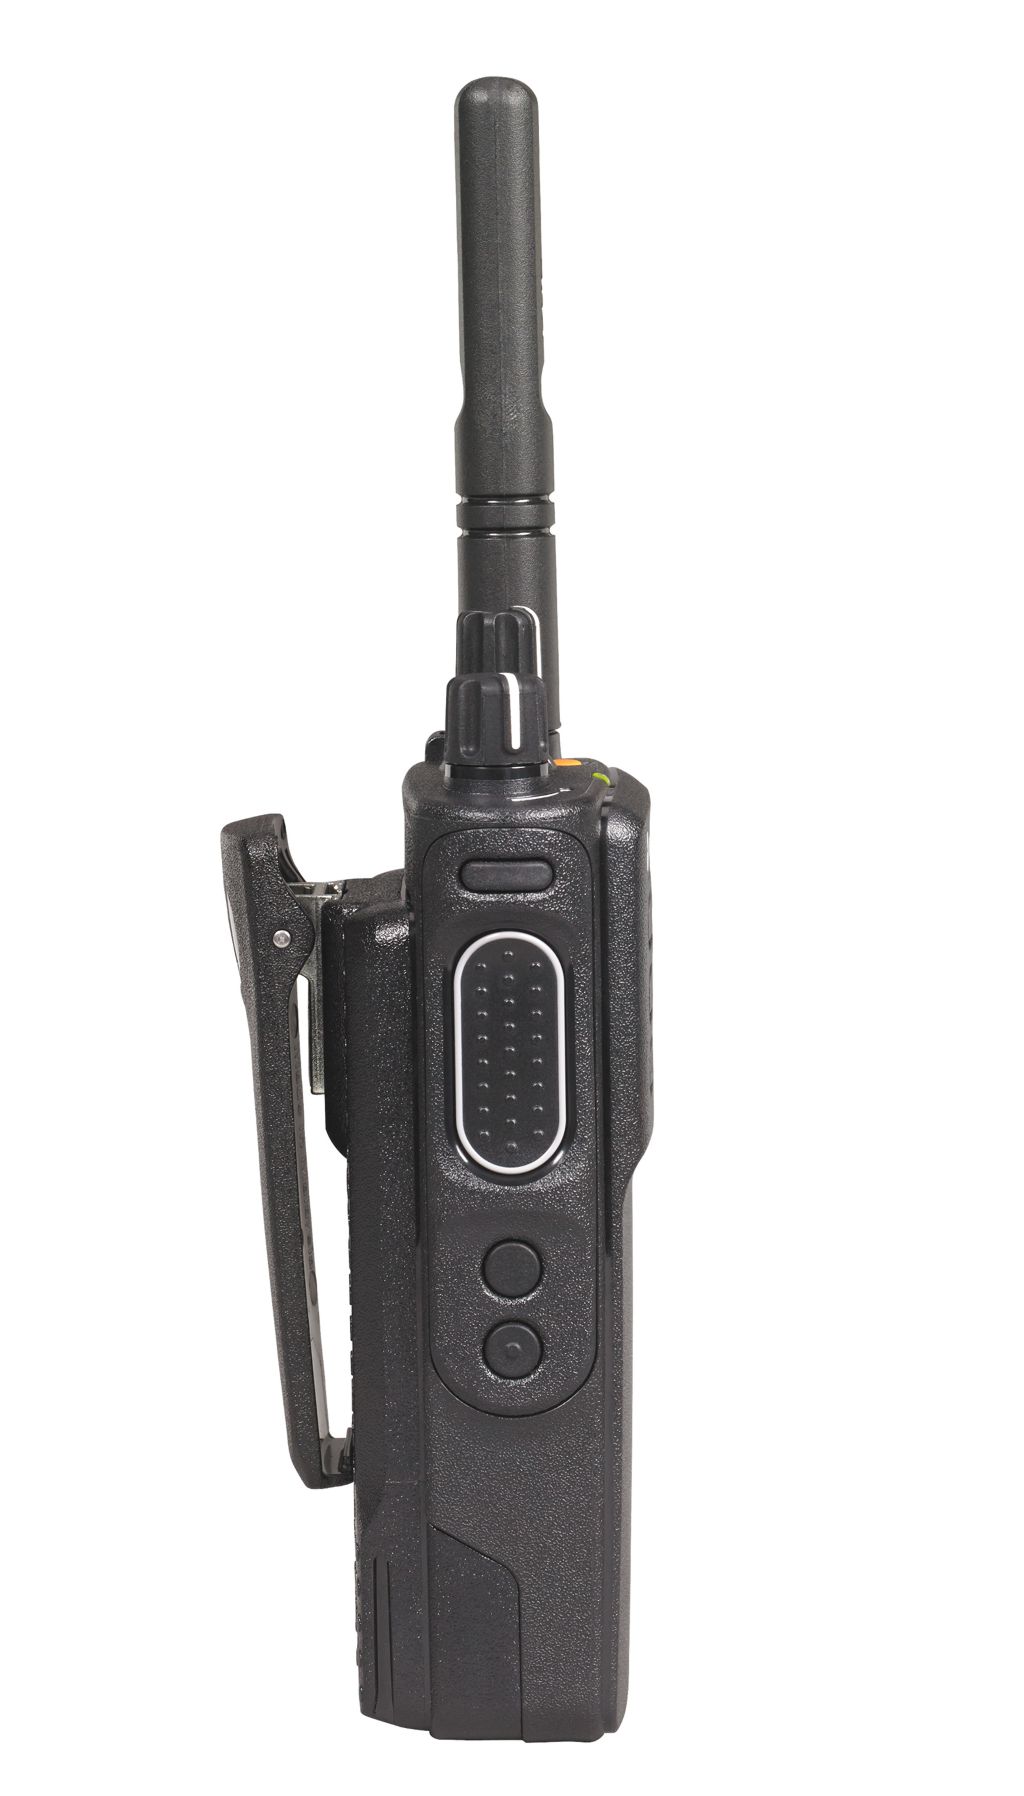 Motorola MOTOTRBO DP4400e VHF 136-174 MHz ohne Zubehör NKP PBER302C MDH56JDC9VA1AN